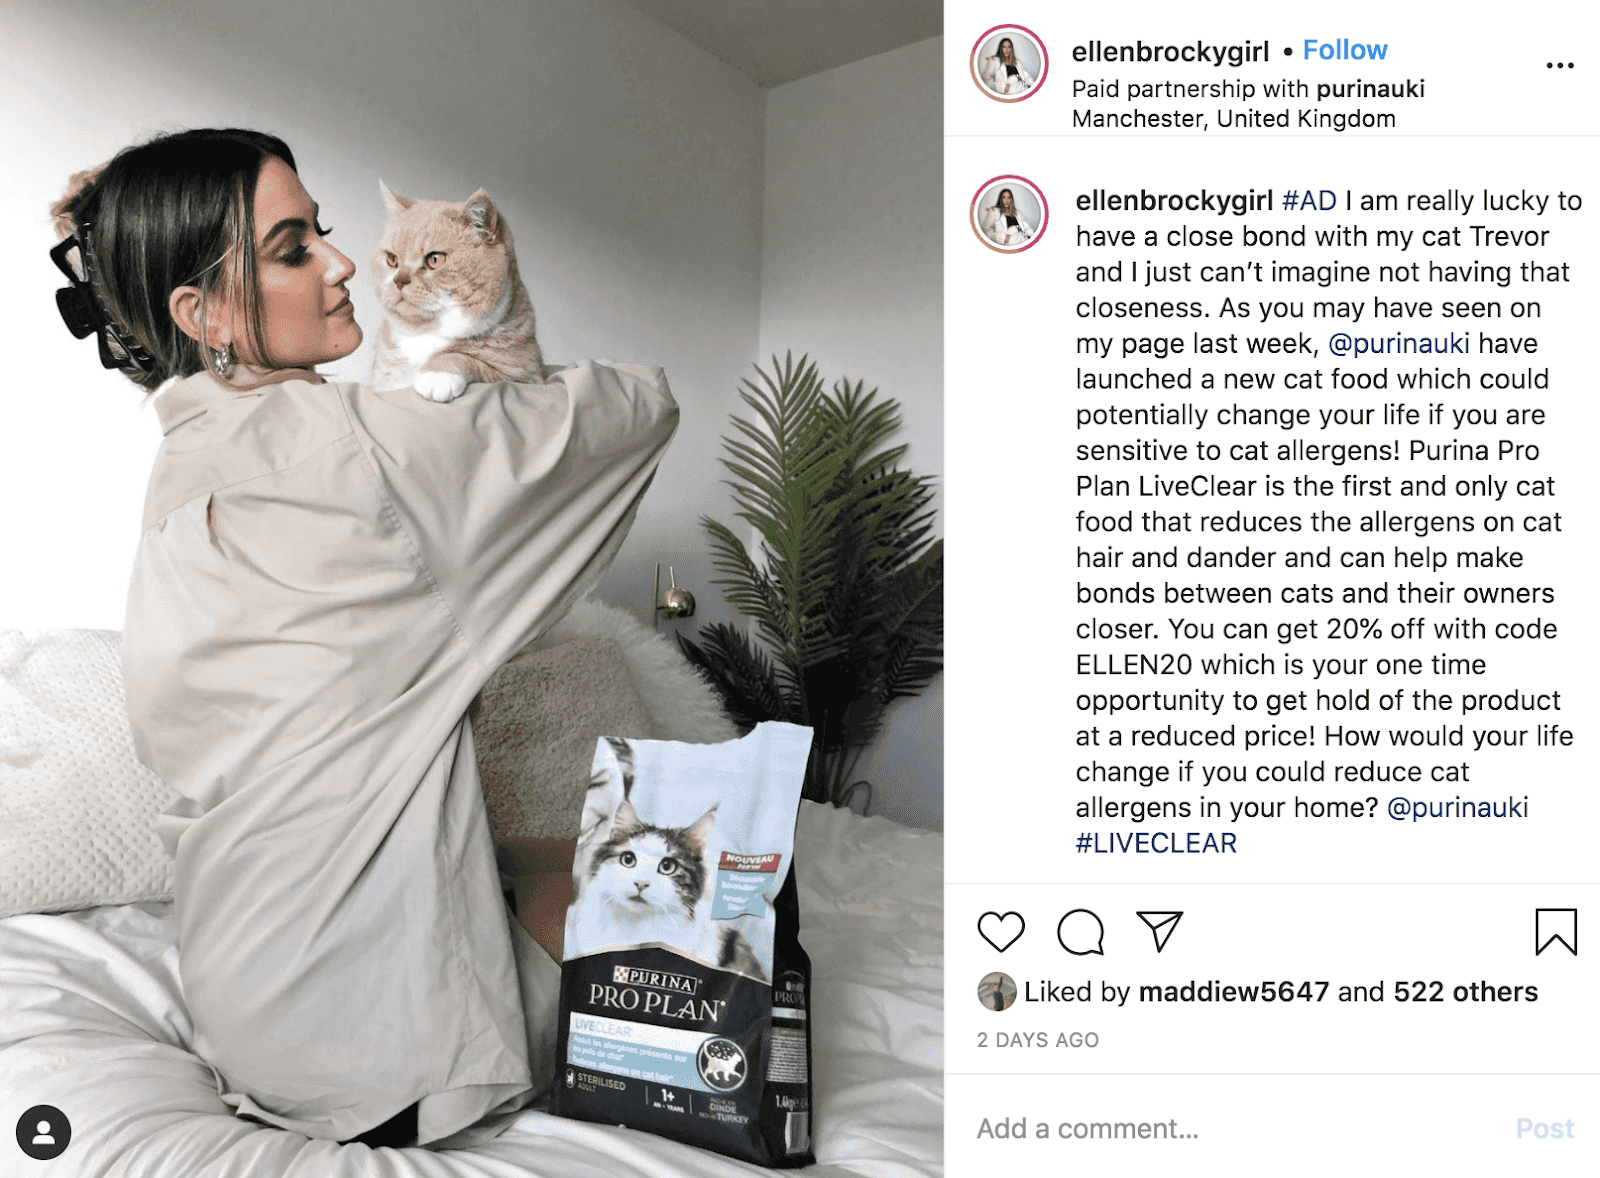 Instagram influencer post promoting Purina cat food